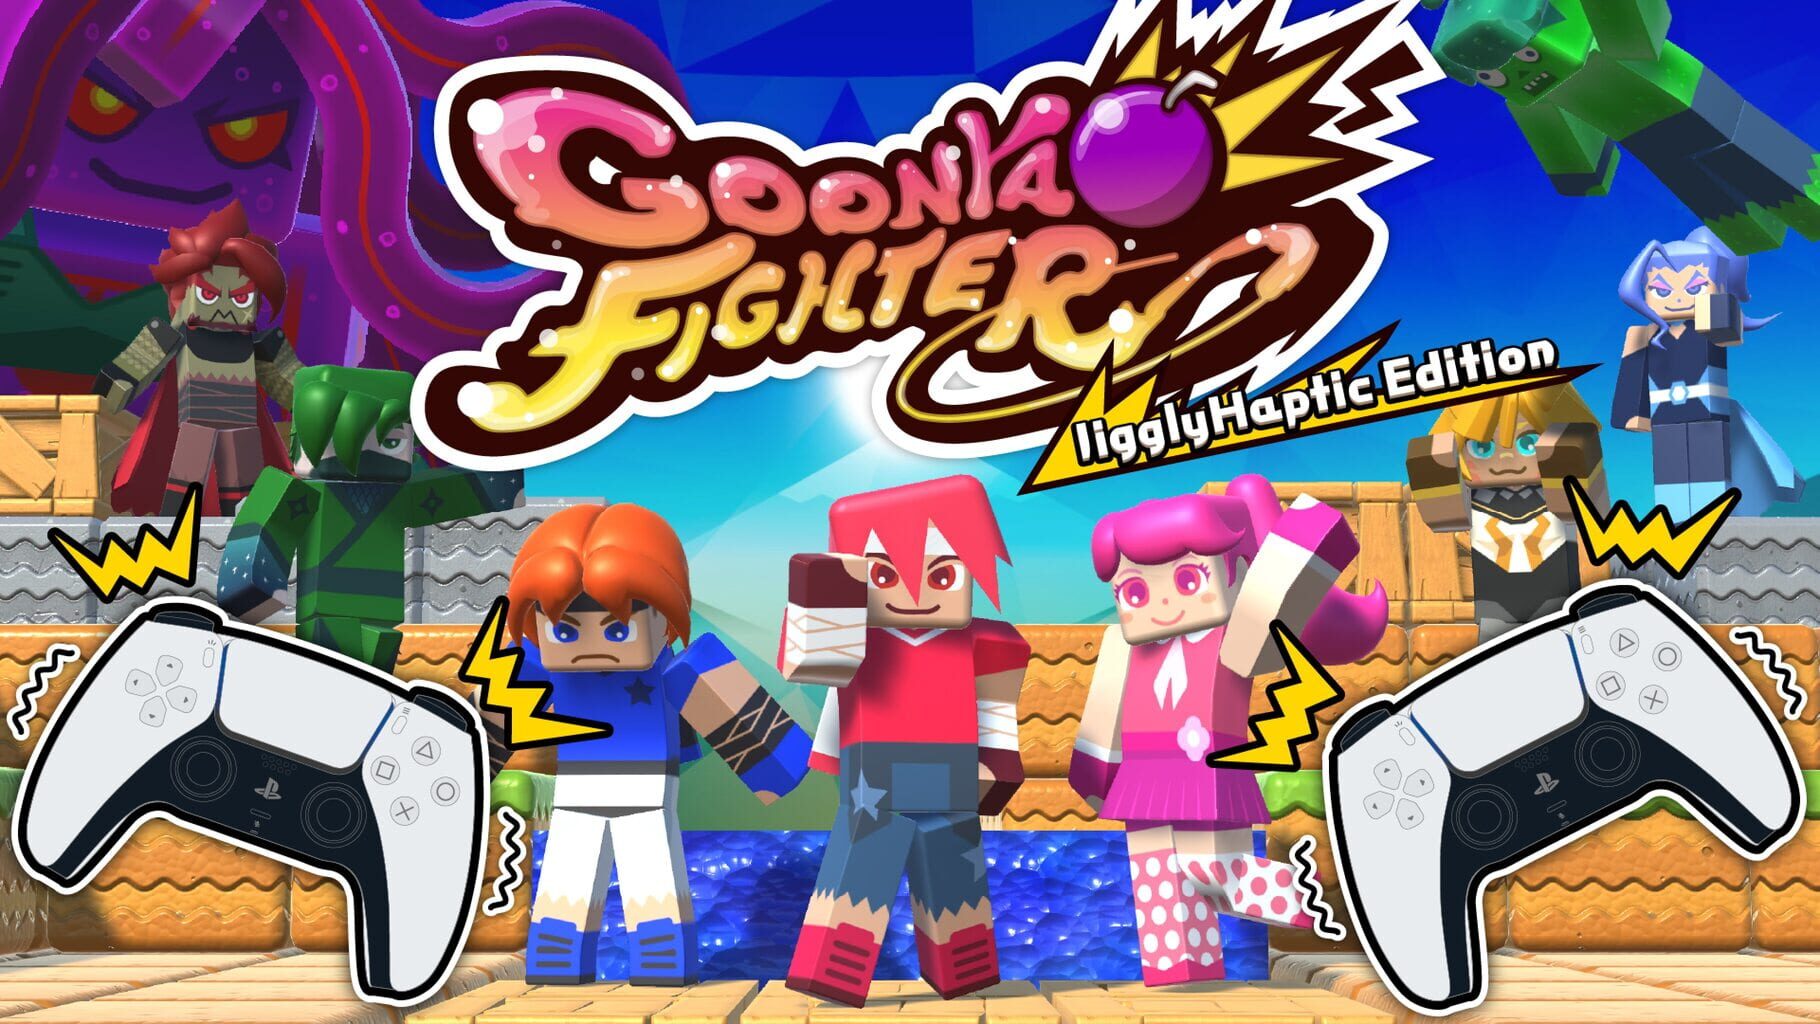 Arte - Goonya Fighter: Jiggly Haptic Edition